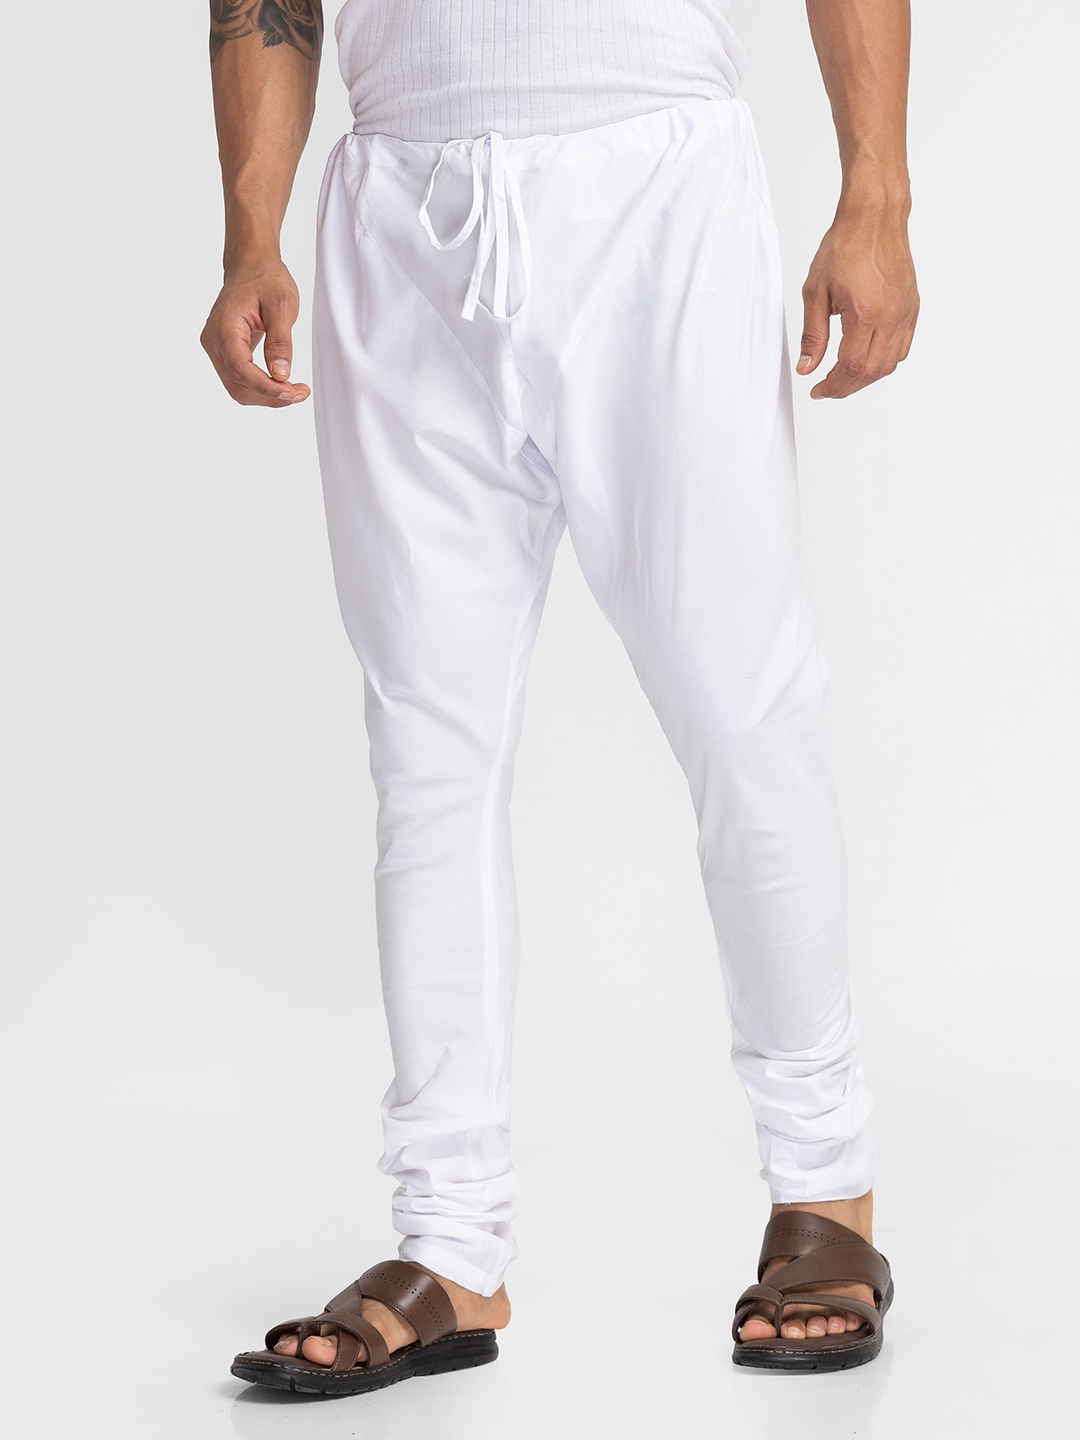 Globus White Solid Cotton Chudidaar Pyjama